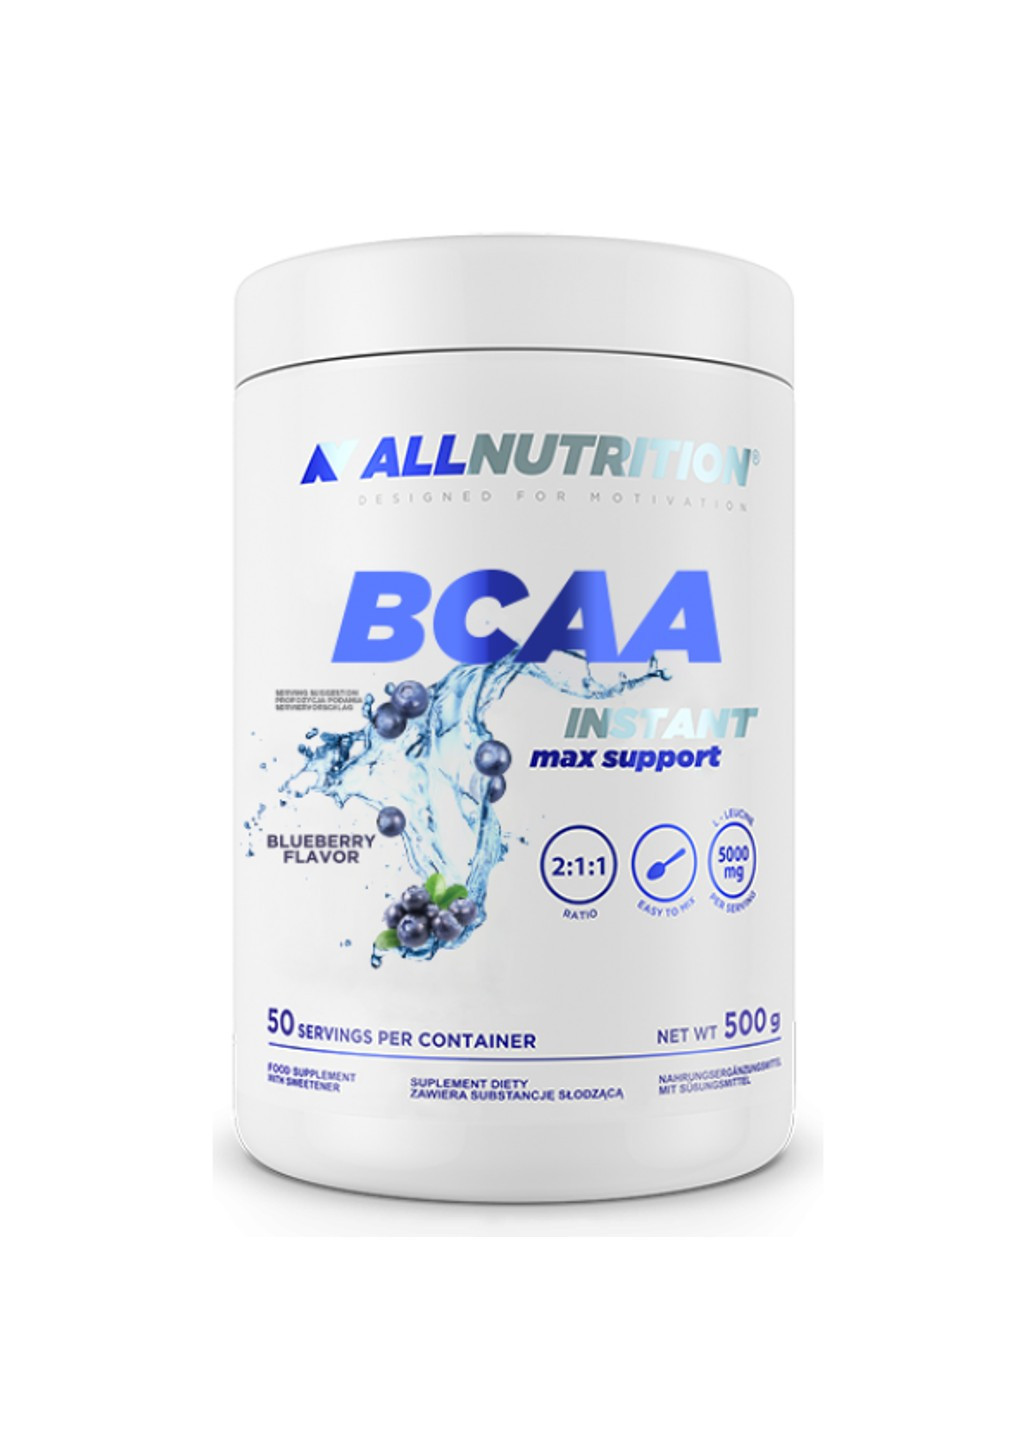 БЦАА BCAA Max Support Instant (500 г) алл нутришн макс саппорт Bllueberry Allnutrition (255362712)